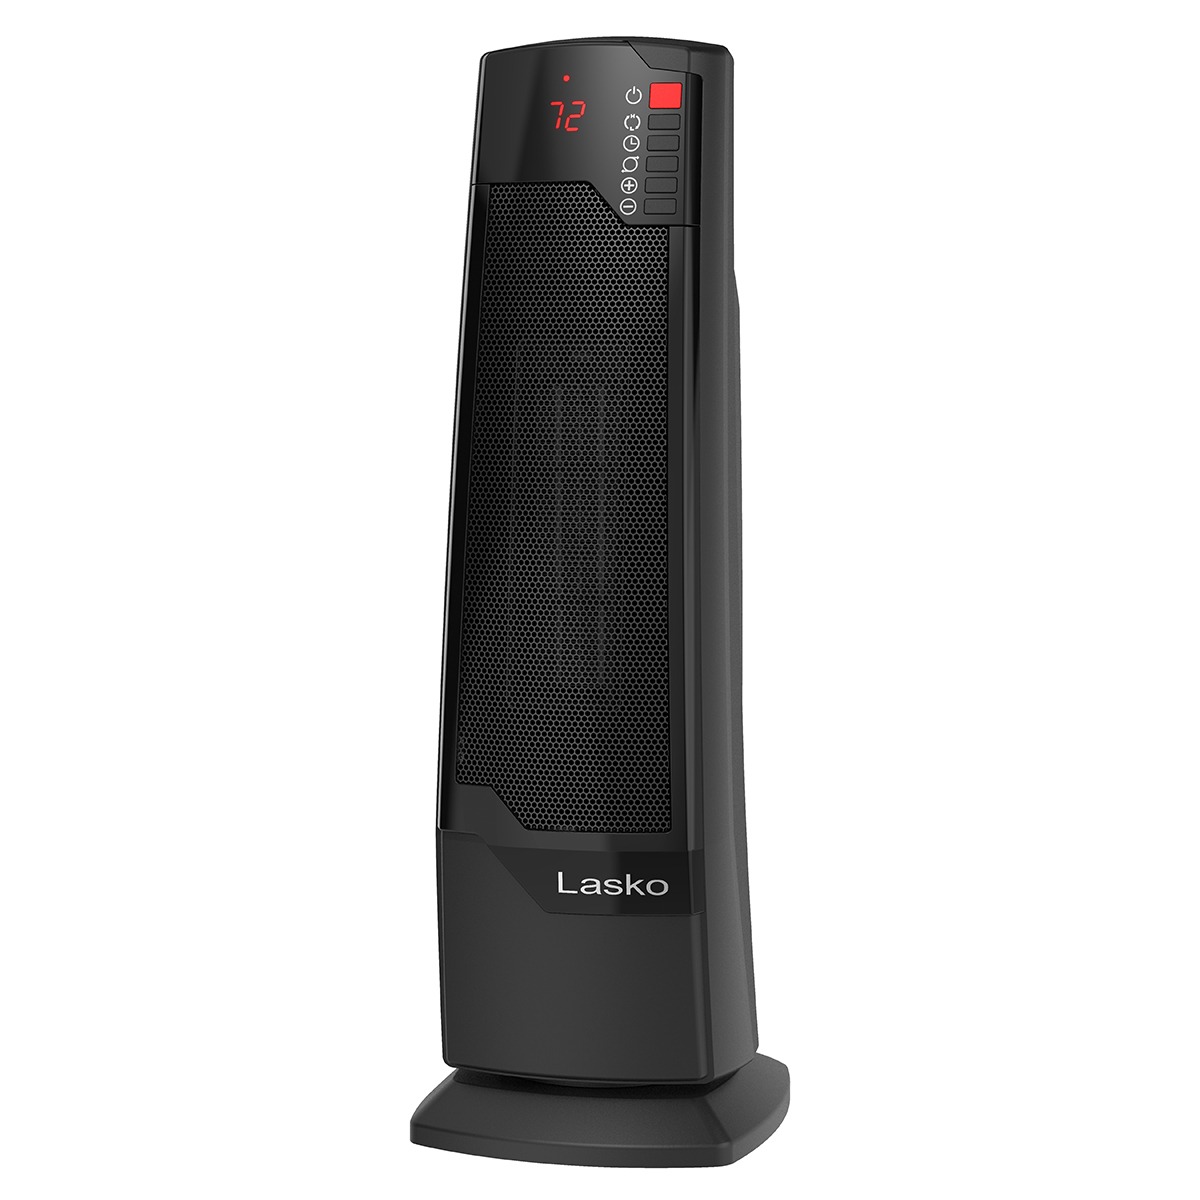 Lasko Digital Ceramic Tower Heater with Remote Control Model CT22835